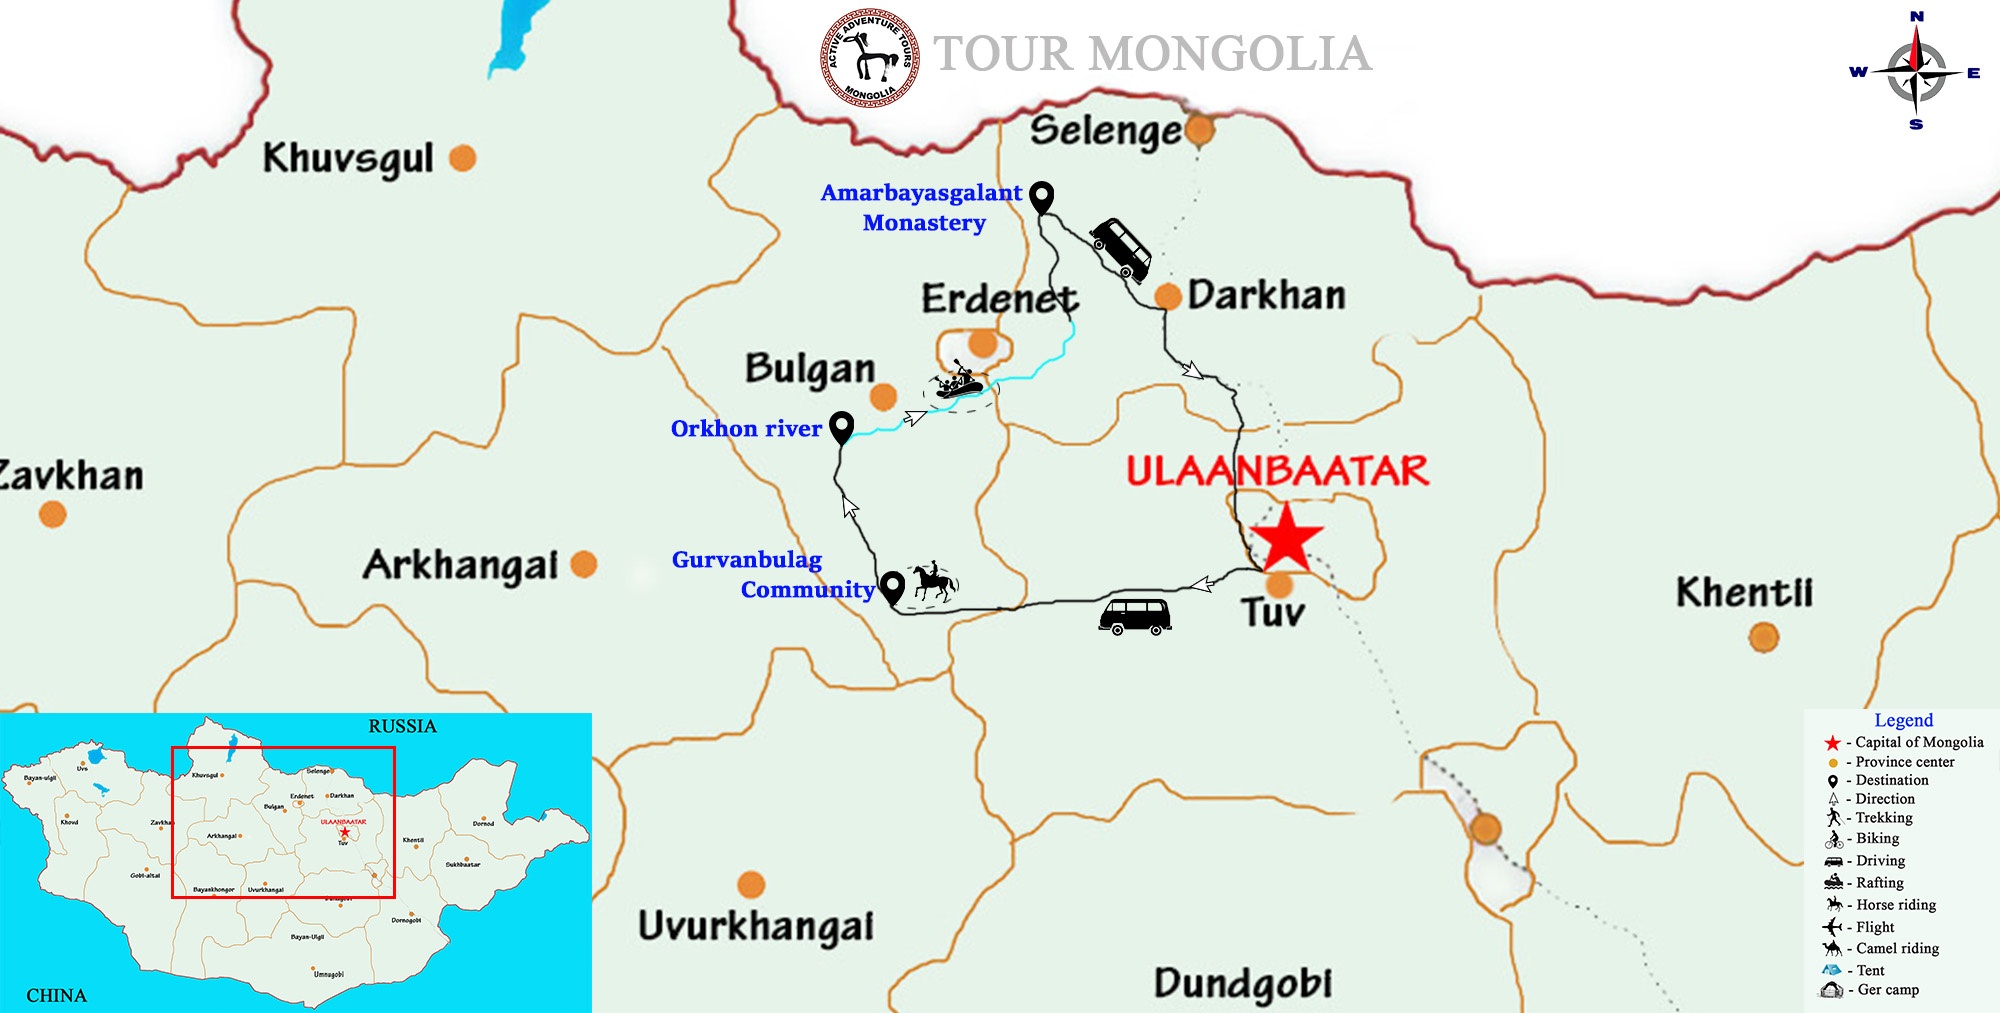 tourhub | Tour Mongolia | Orkhon river rafting | Tour Map